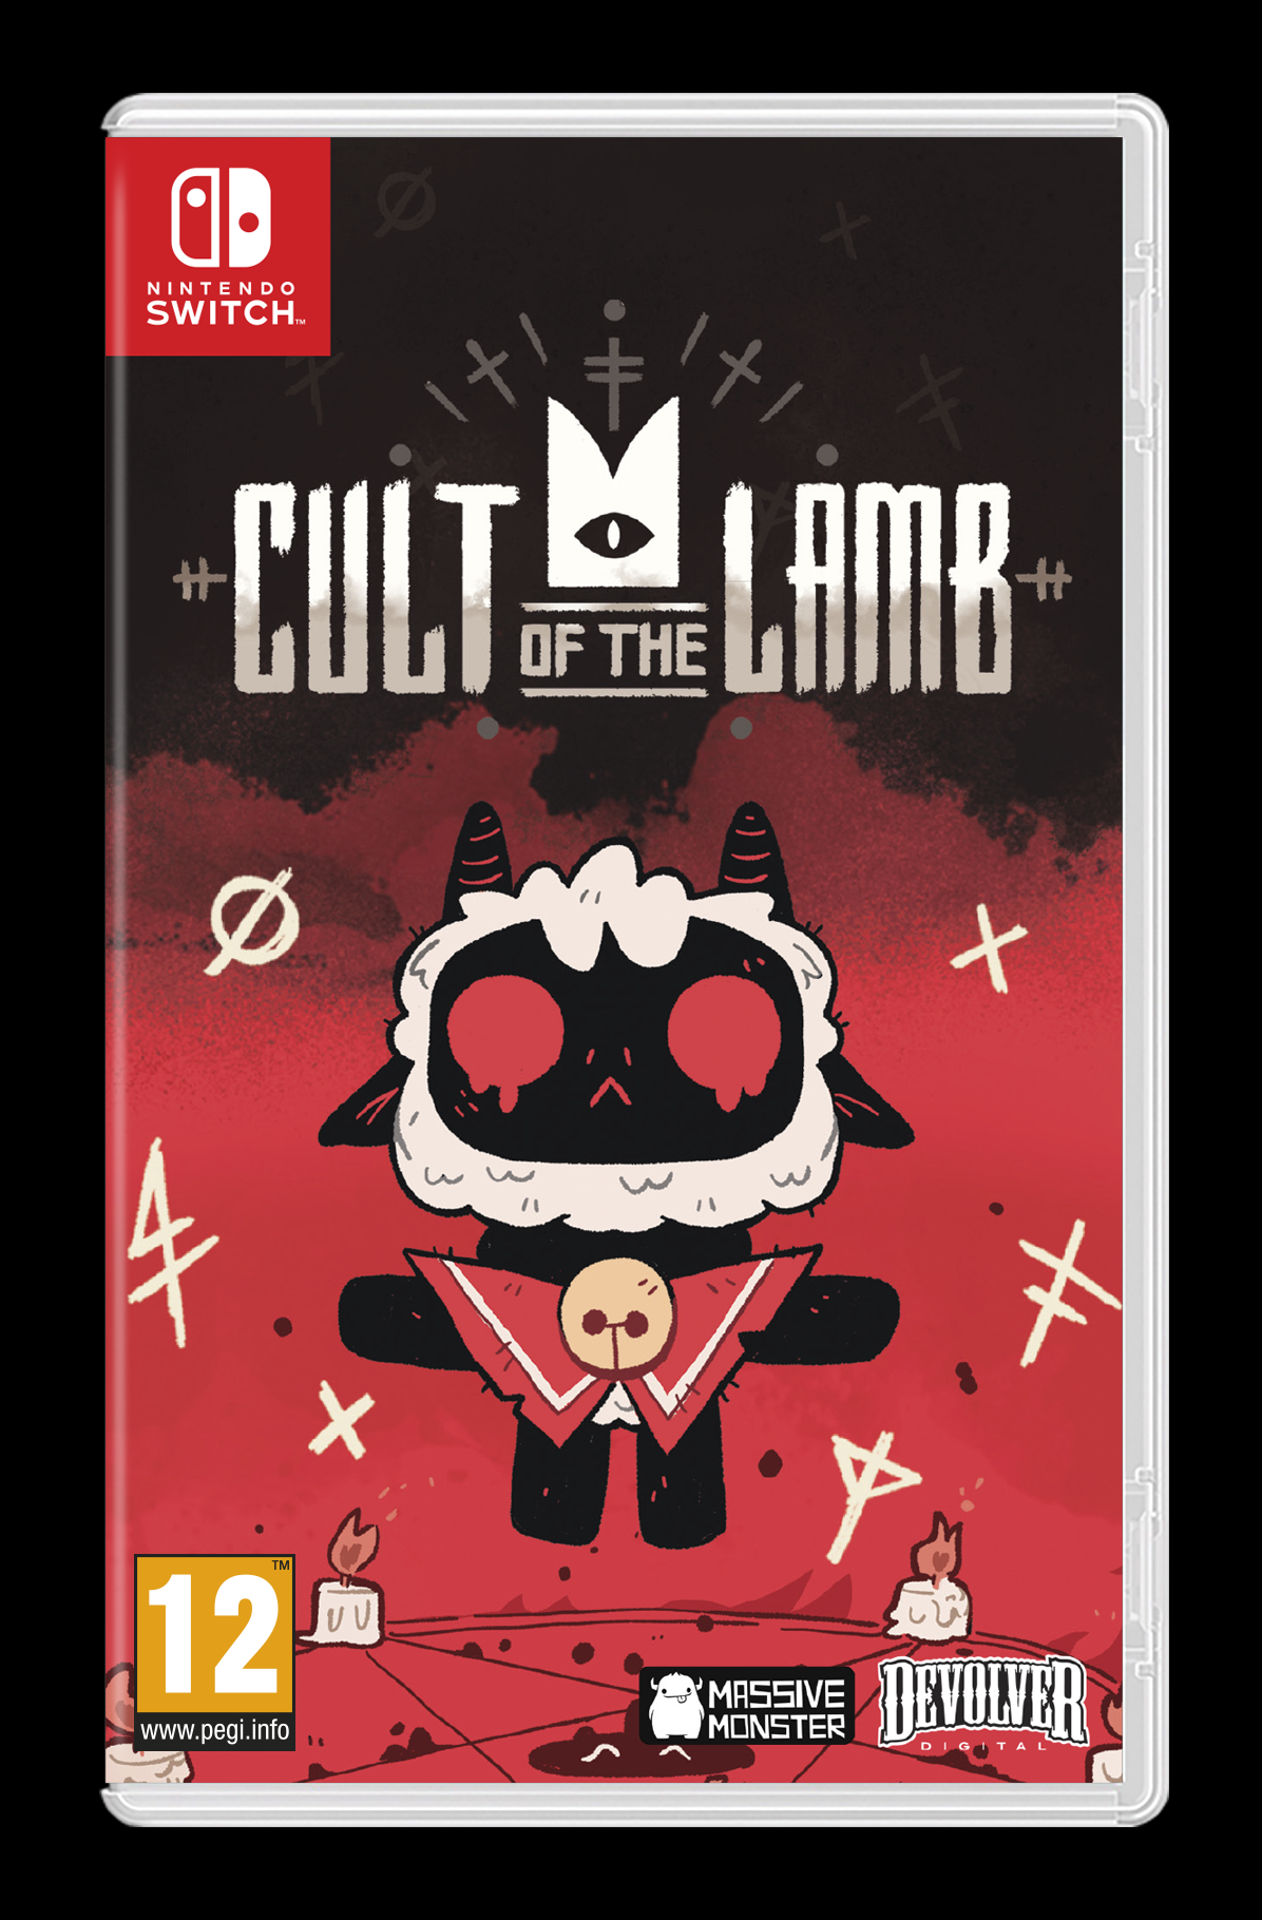 Acheter Cult of the Lamb - Nintendo Switch prix promo neuf et